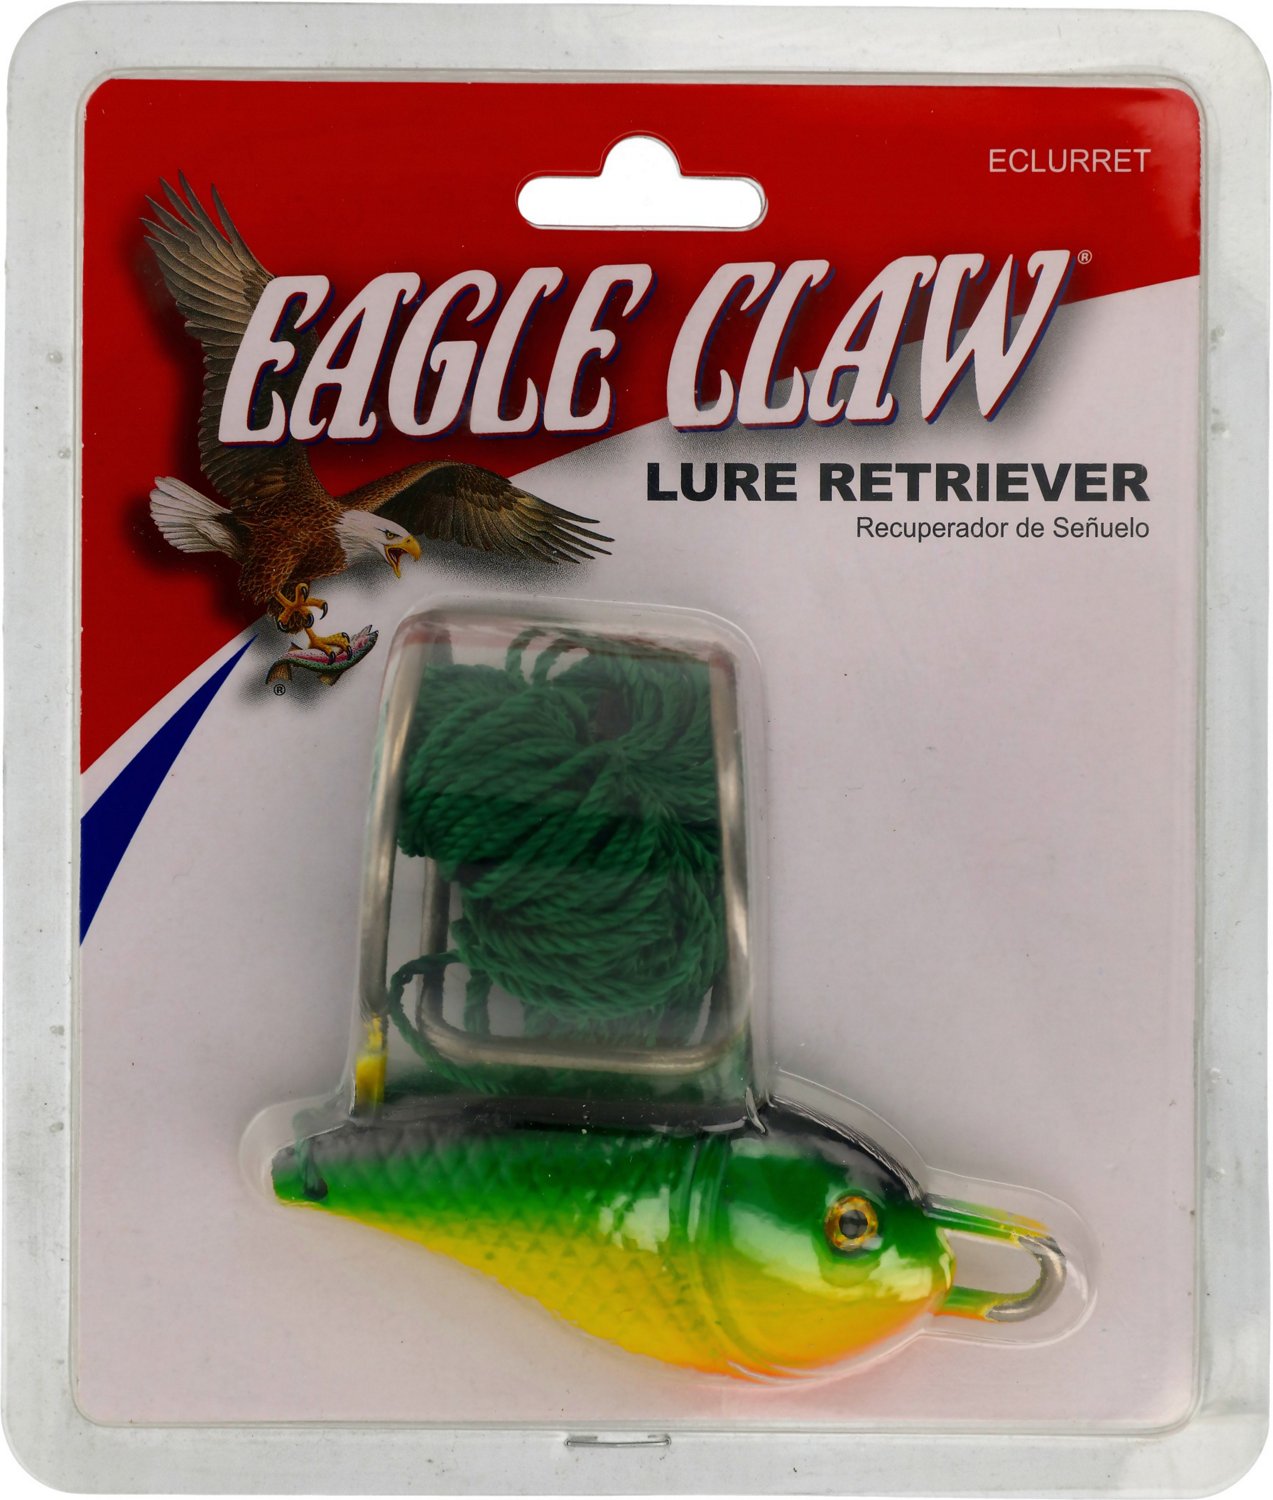 Eagle Claw Lure Retriever